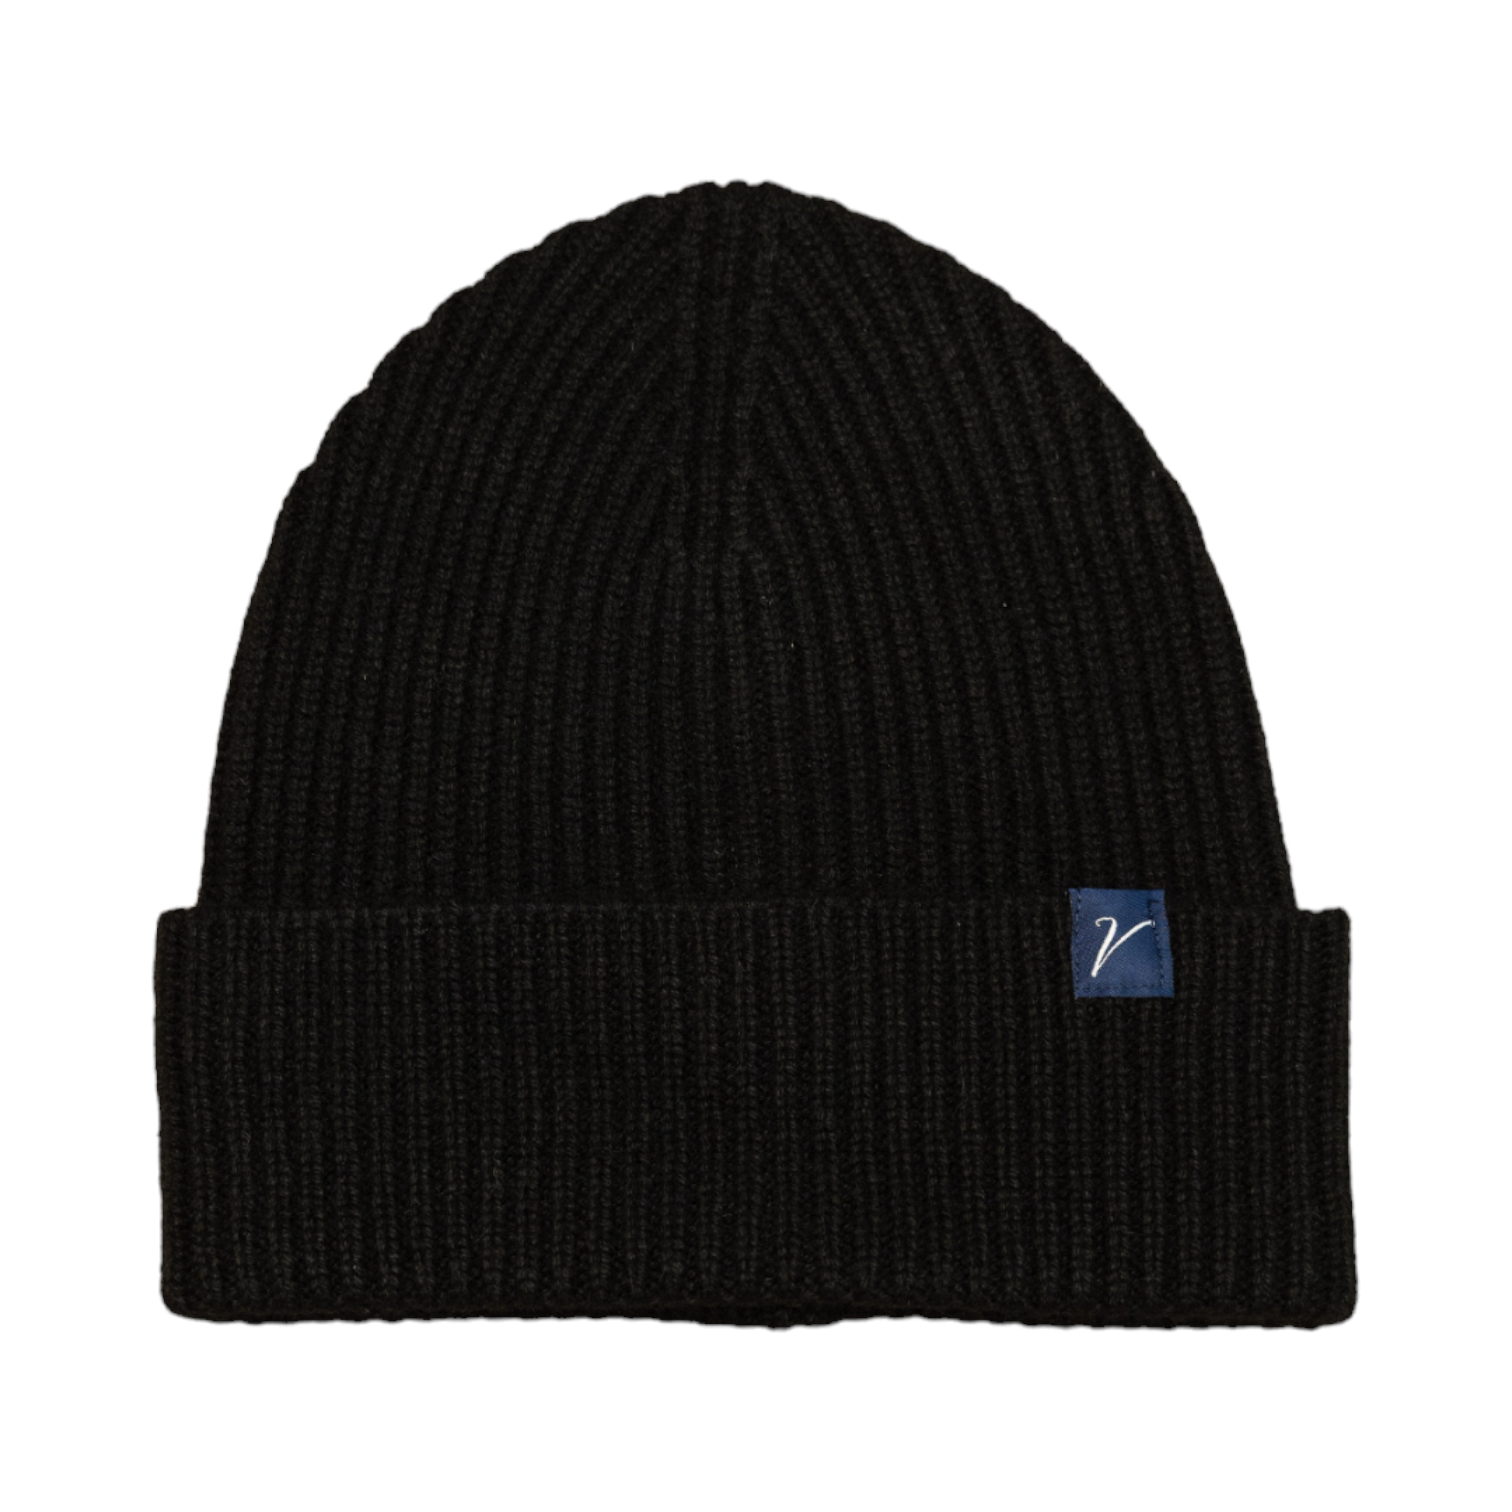 100% Cashmere Beanie Winter Hat Onyx Black